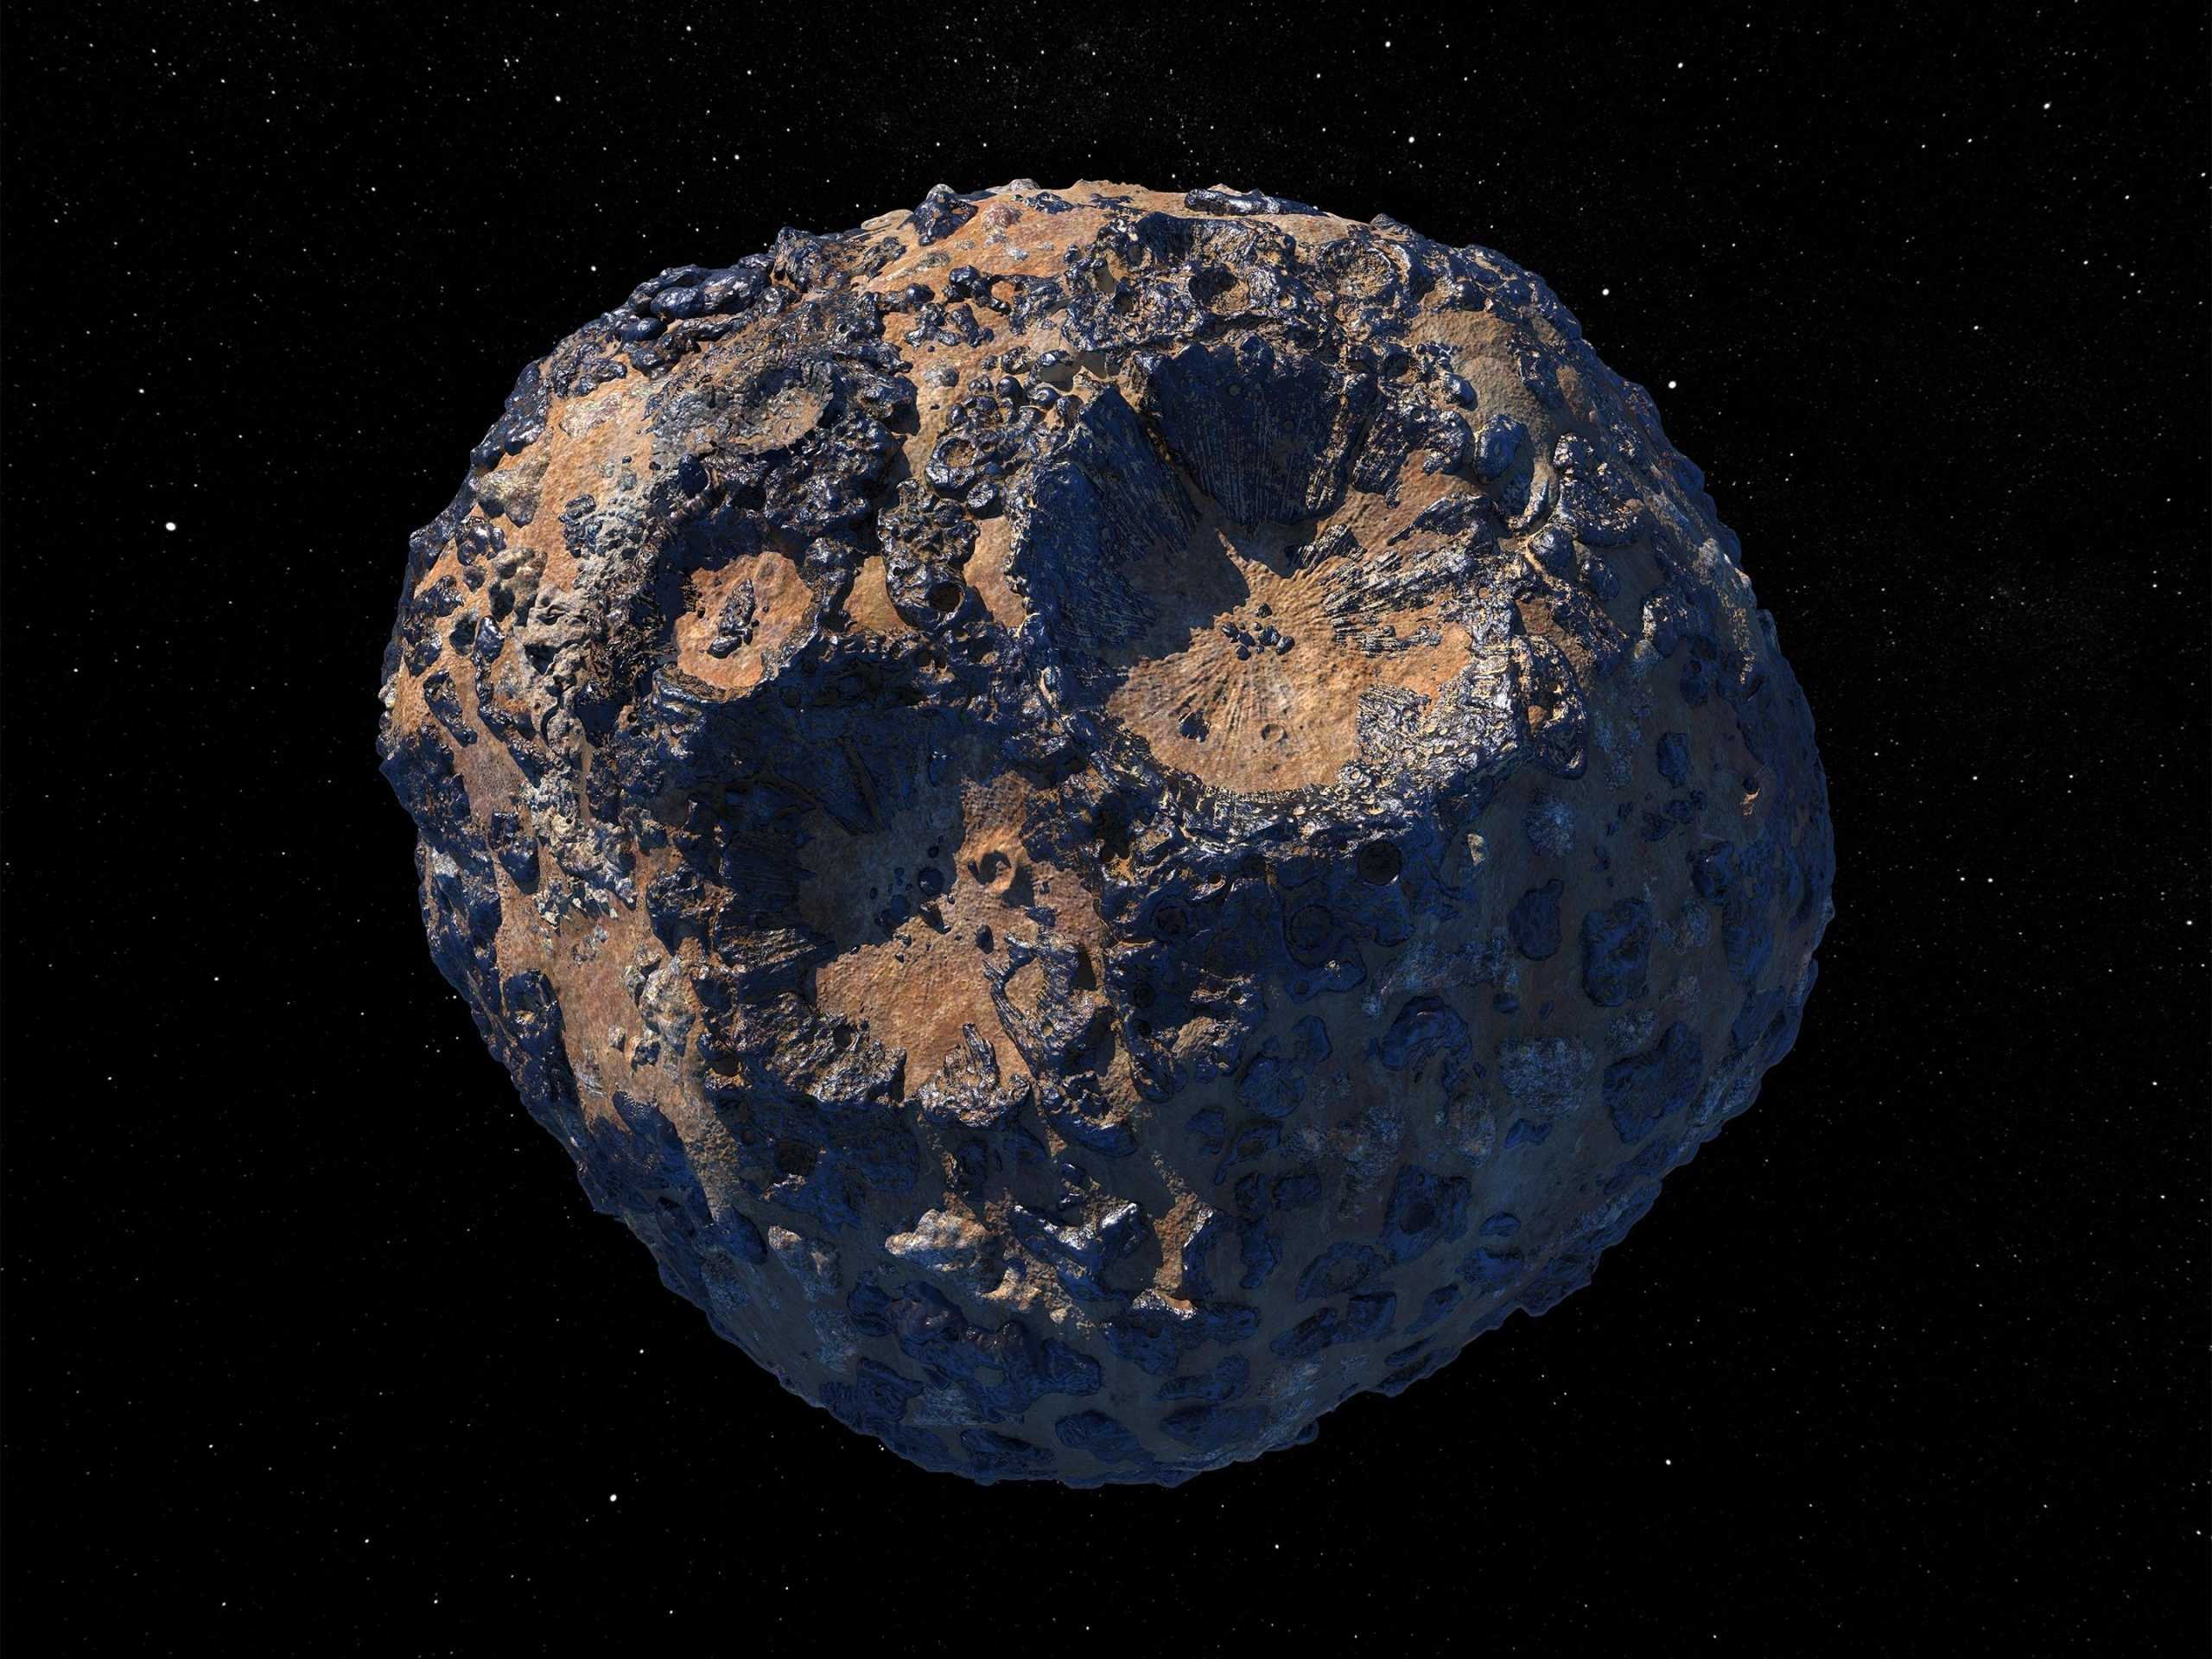 Не цельнометаллический астероид